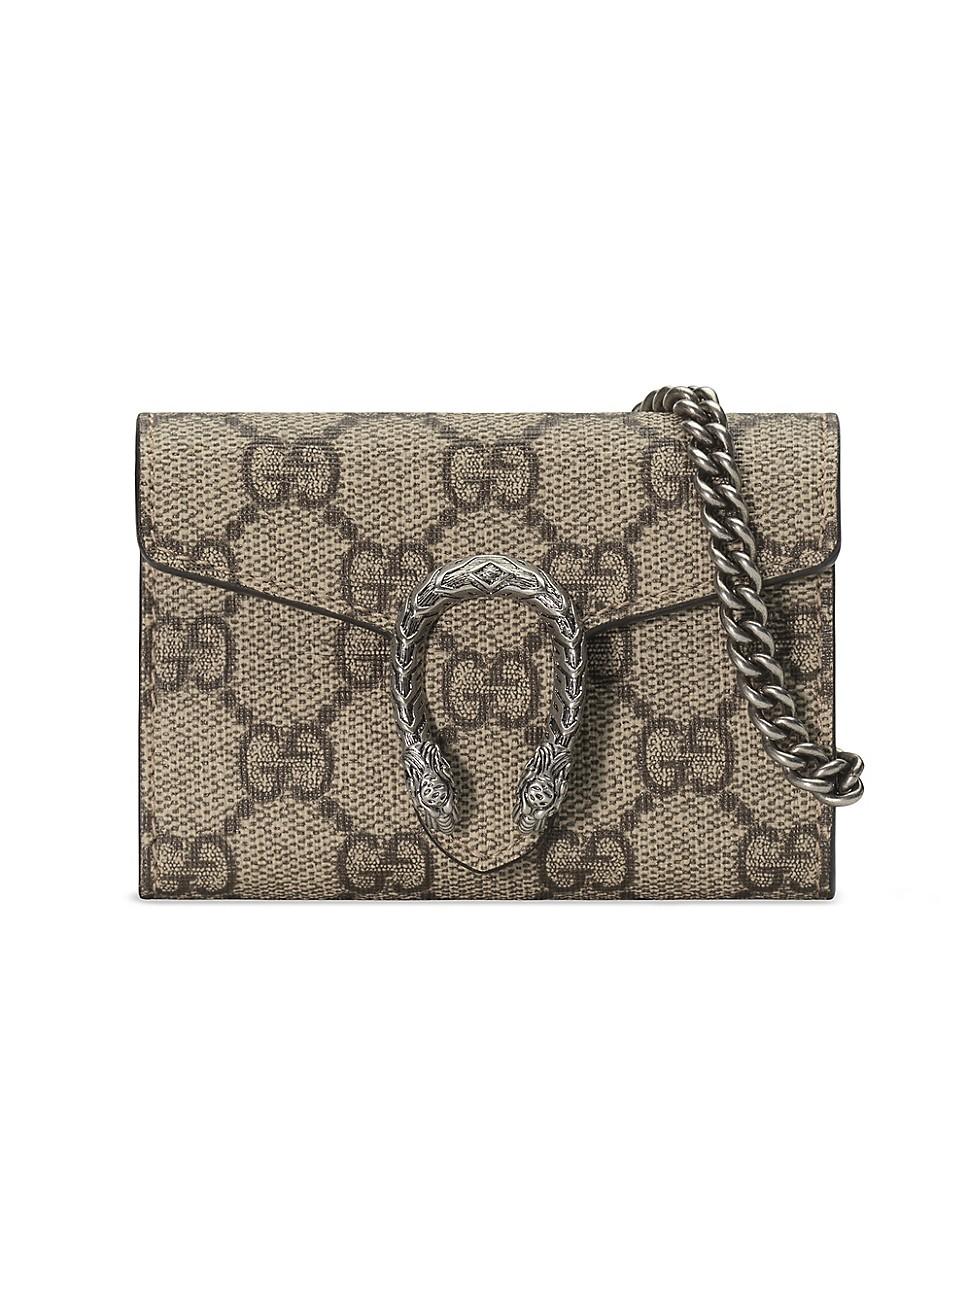 Gucci Canvas Dionysus gg Supreme Chain Wallet in Beige (Natural) - 69% - Lyst